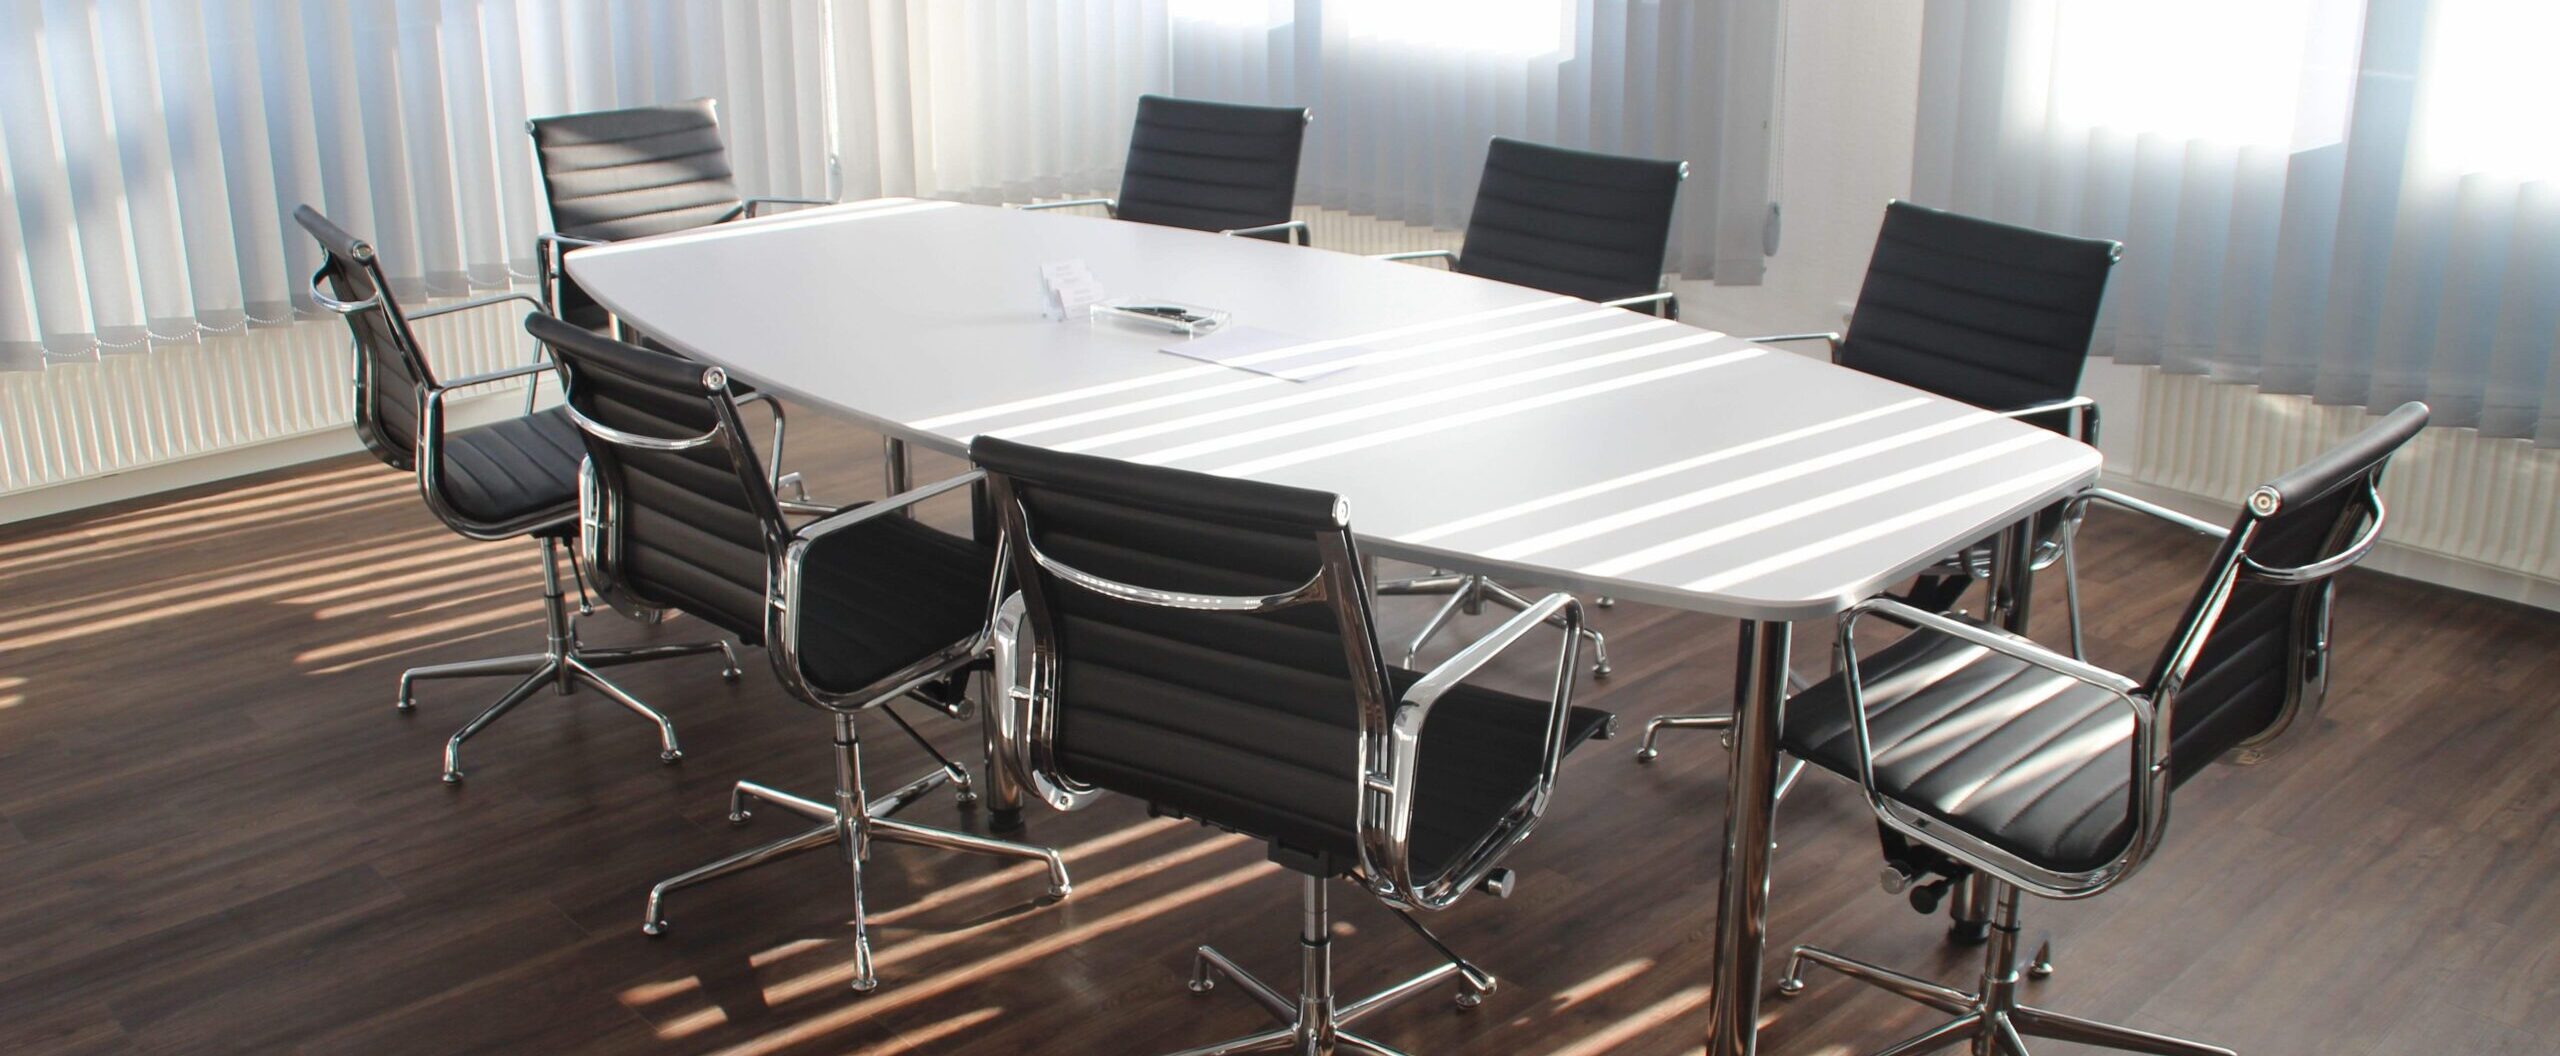 4 Tips for Better Board Meetings